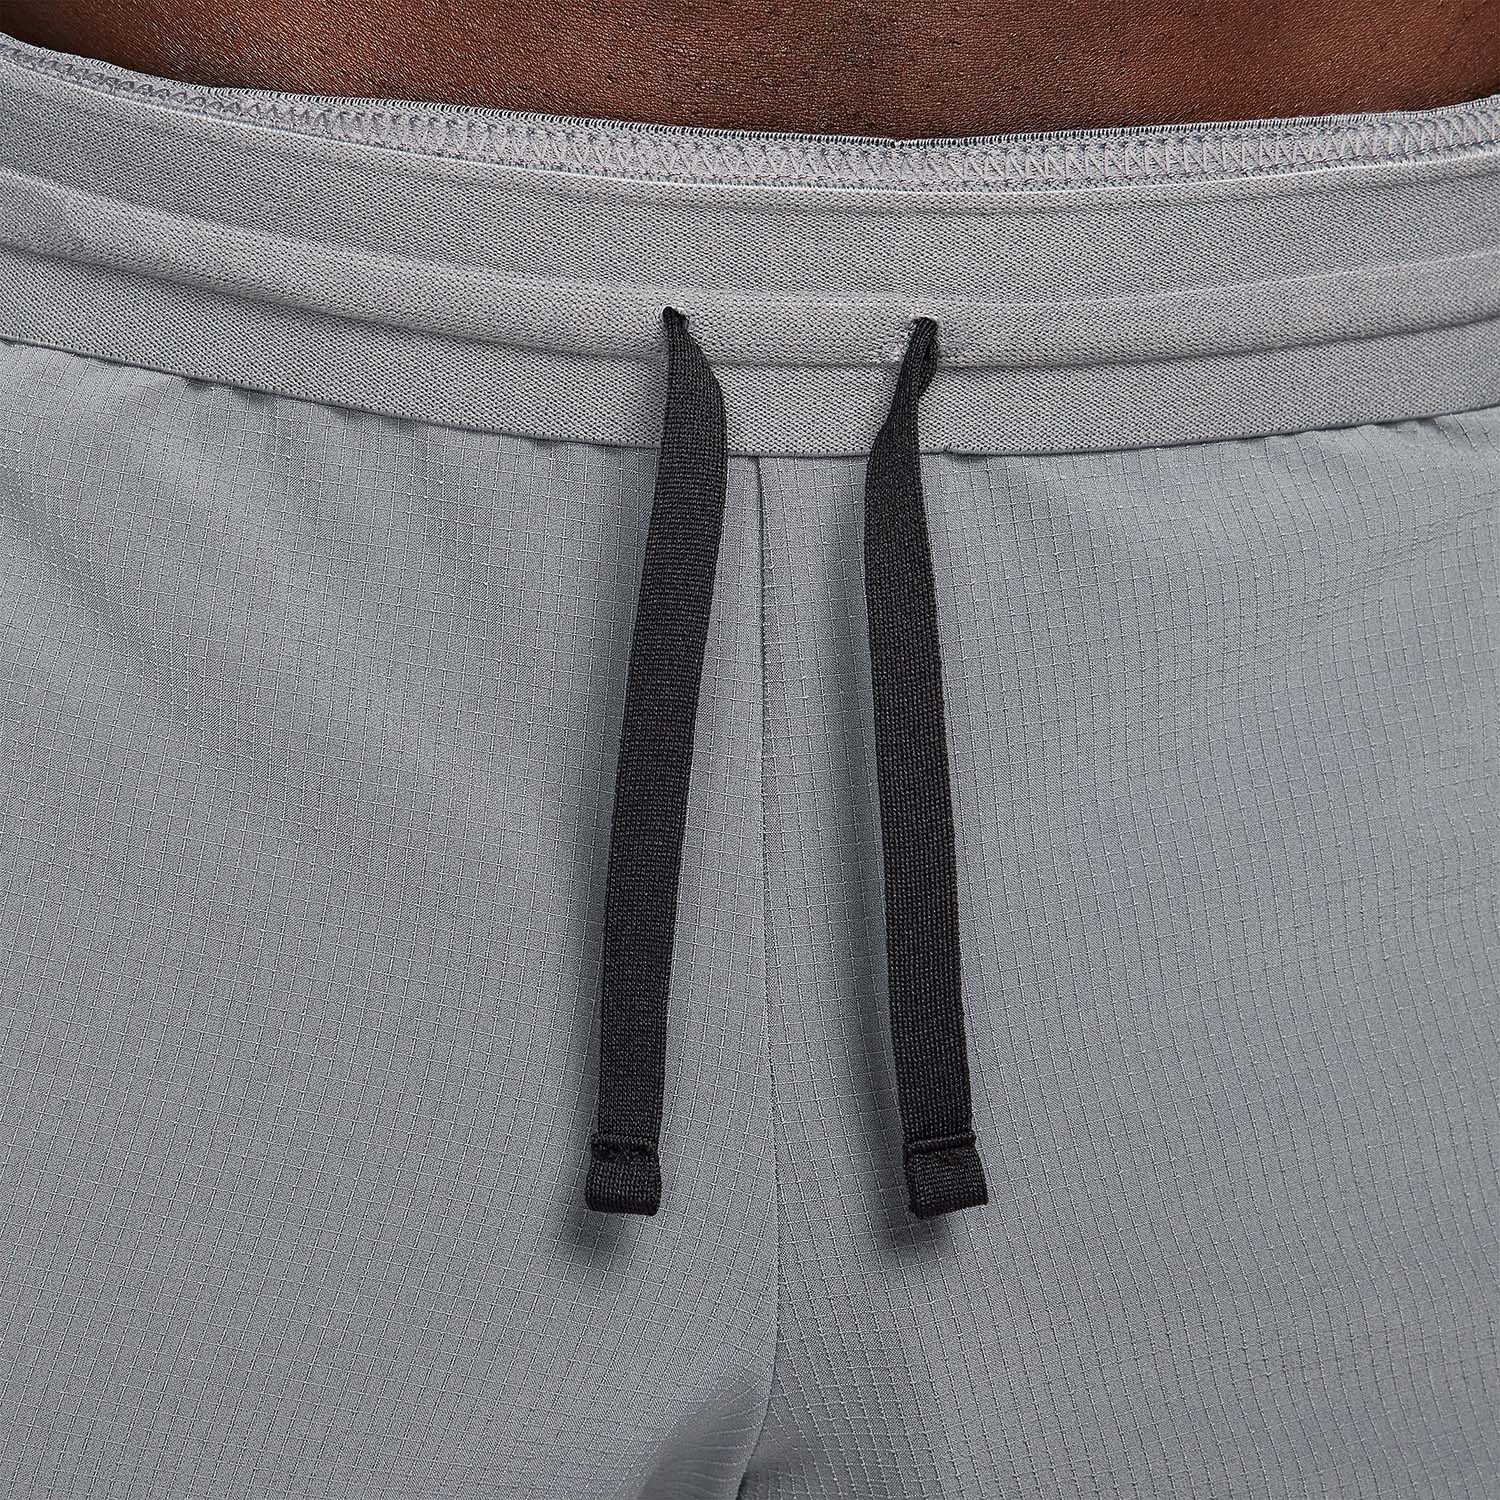 Nike Flex Rep 7in Pantaloncini - Smoke Grey/Black